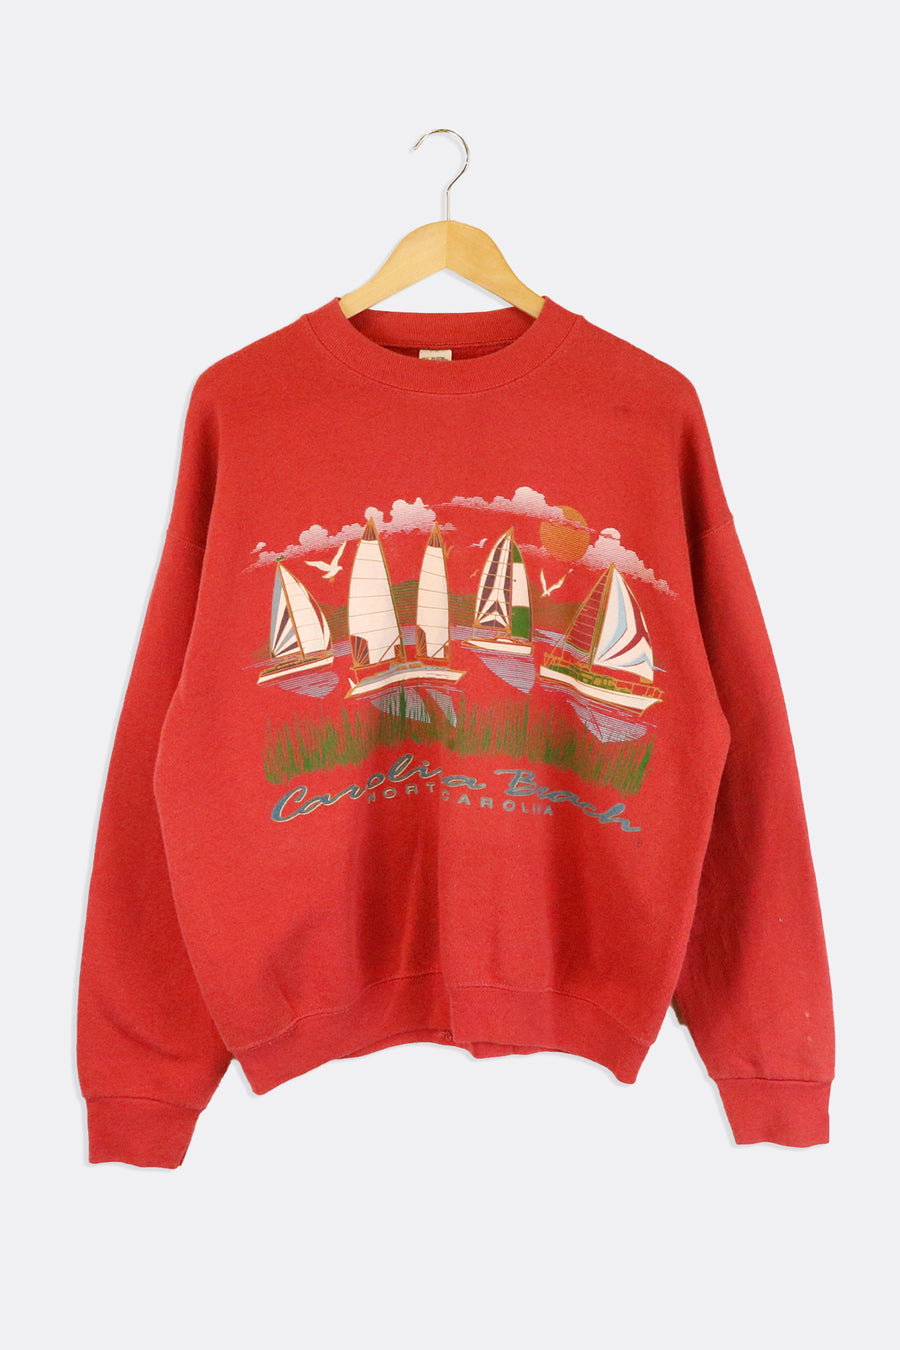 Vintage Carolina Beach Sail Boats Seaguls Graphic Vinyl Sweatshirt Sz L